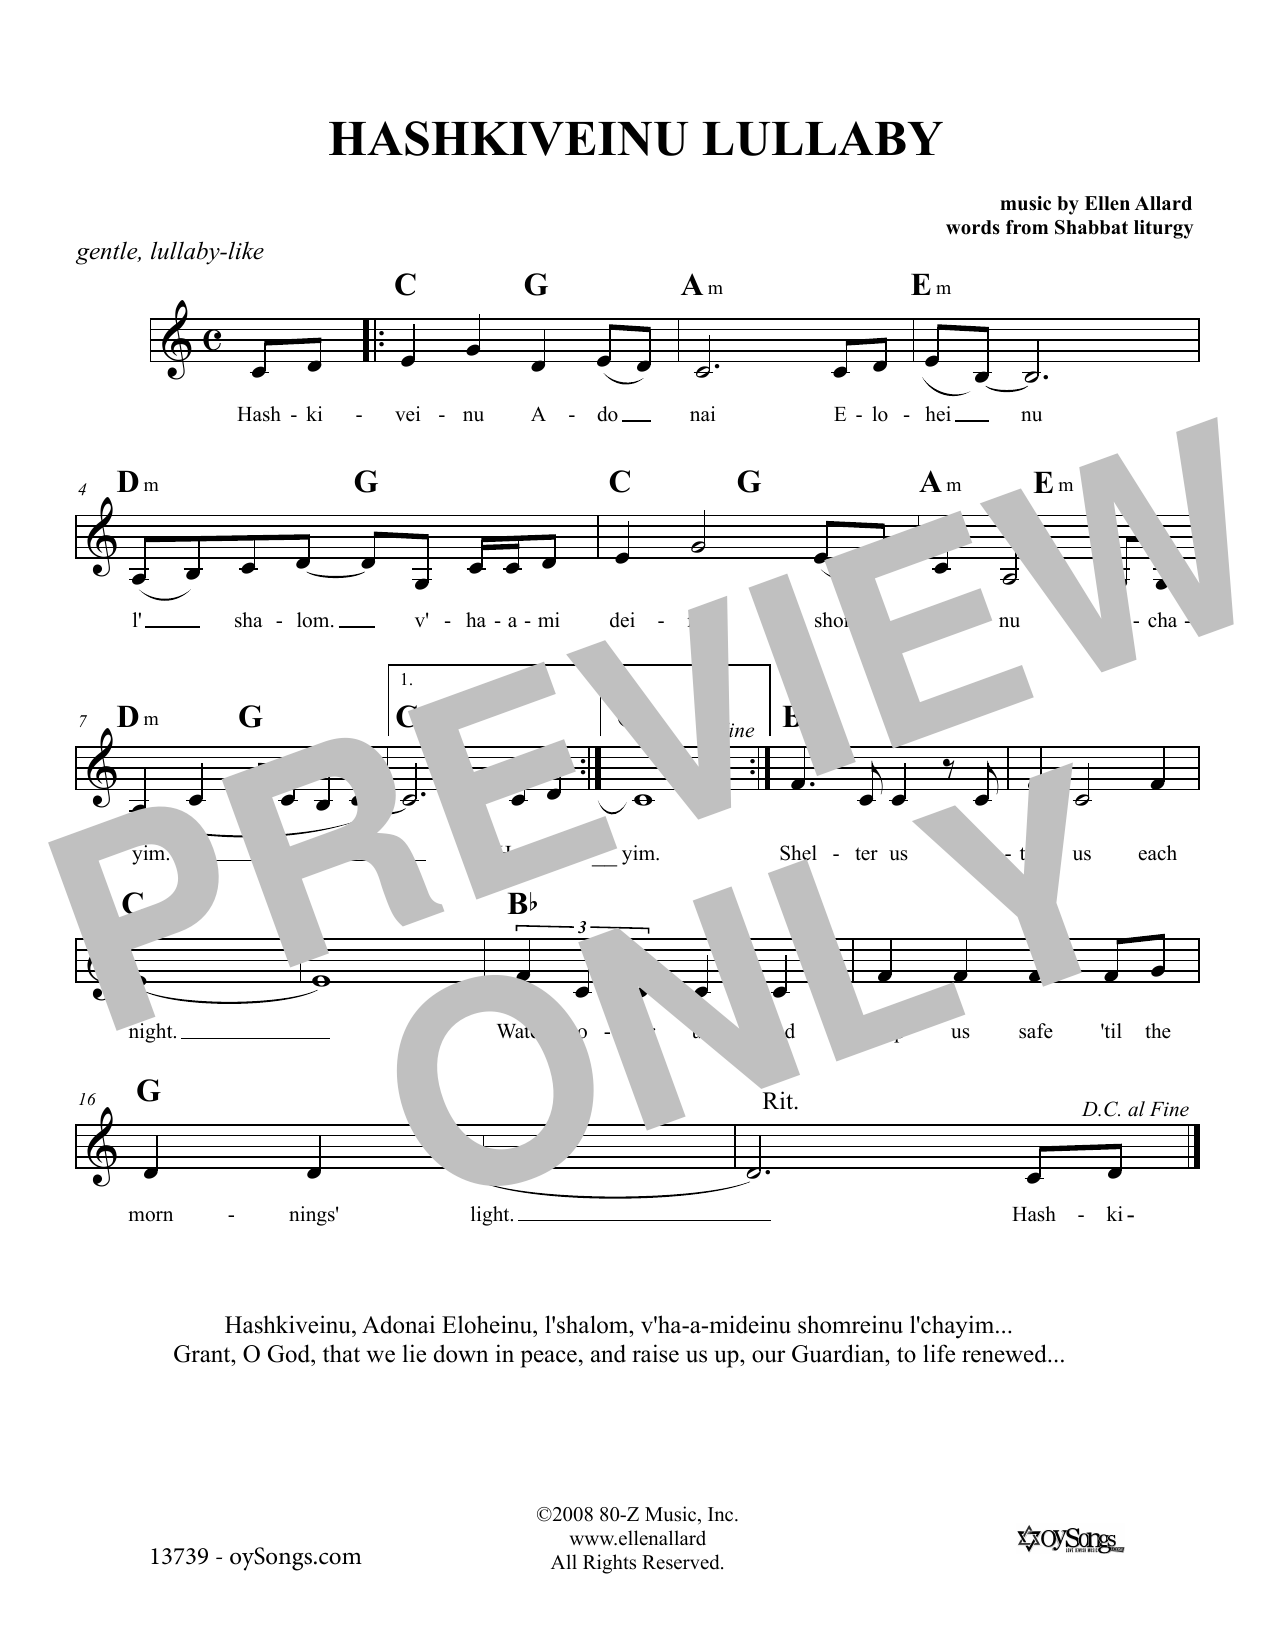 Ellen Allard Hashkiveinu Lullaby sheet music notes and chords arranged for Lead Sheet / Fake Book